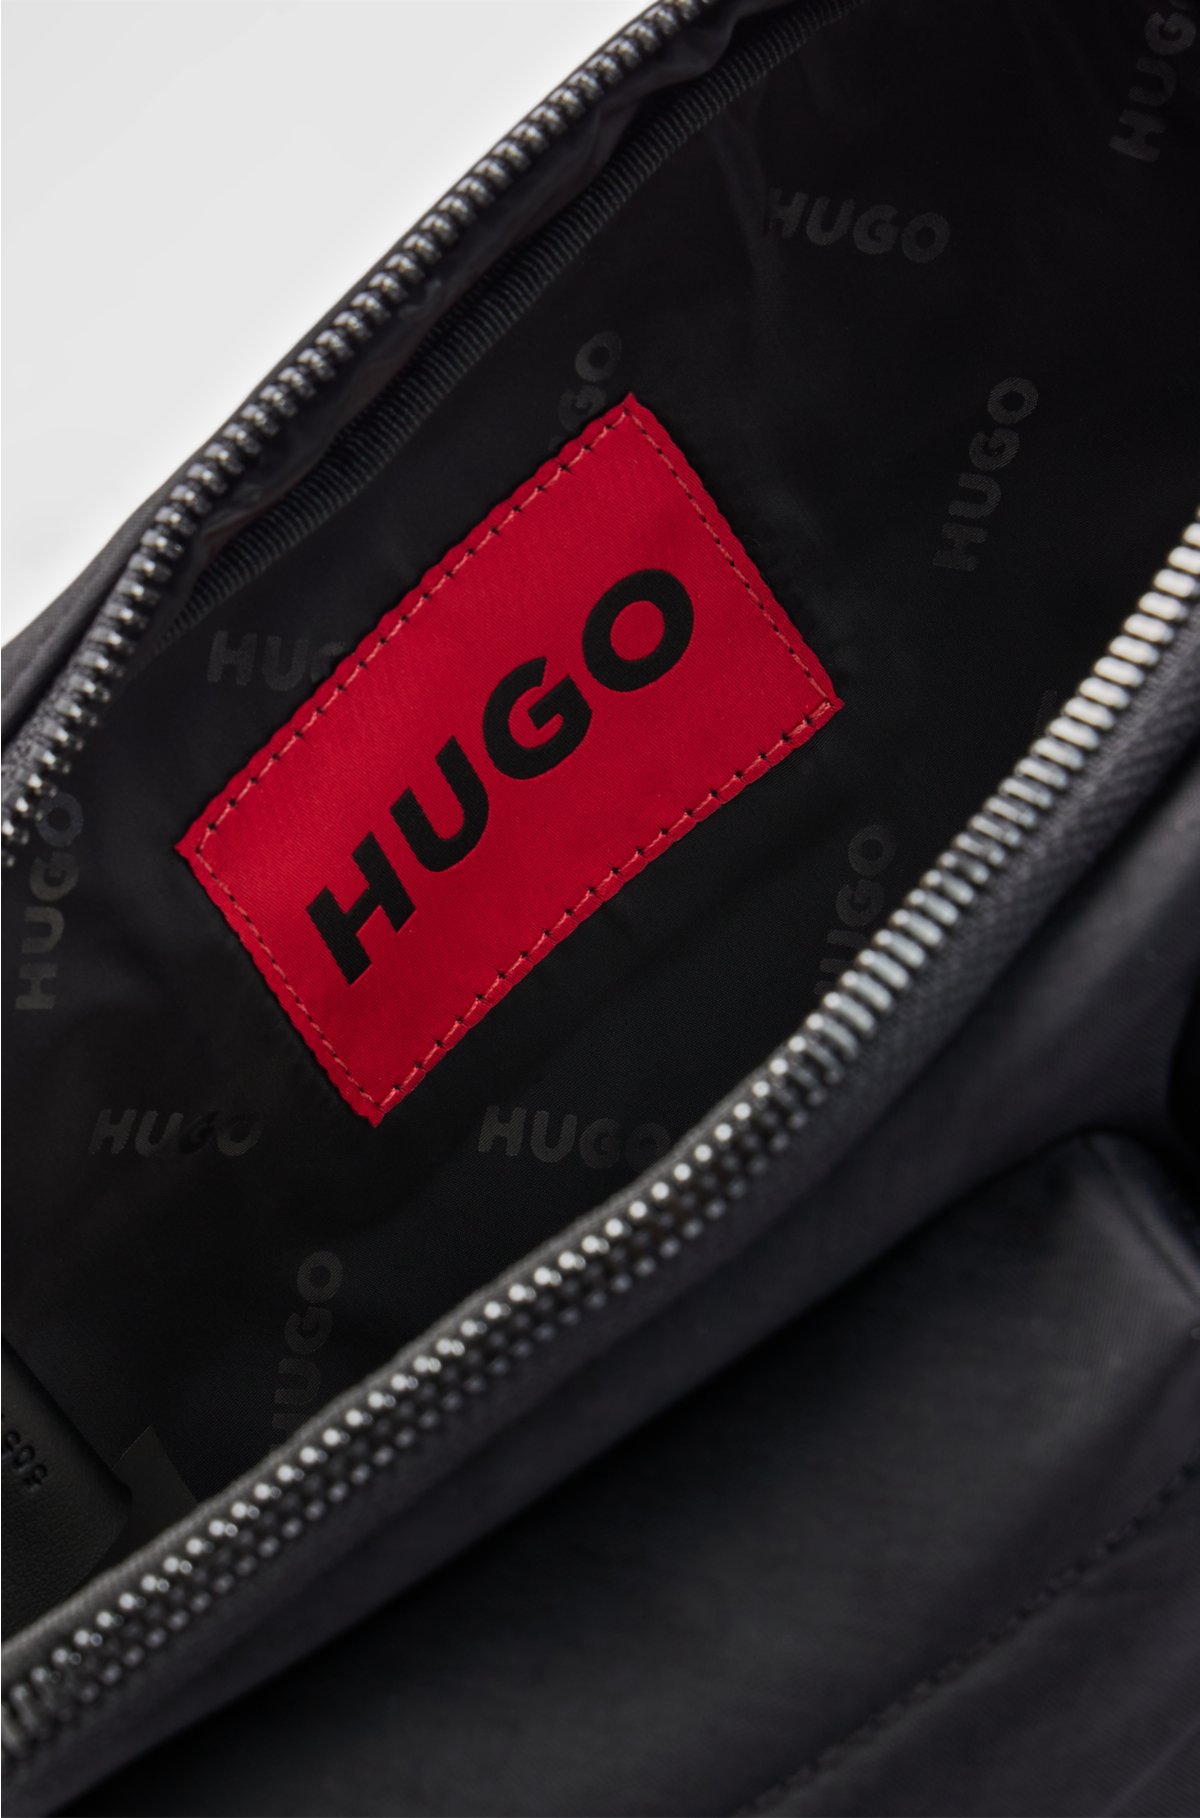 with - HUGO bag strap Cross-body adjustable branded